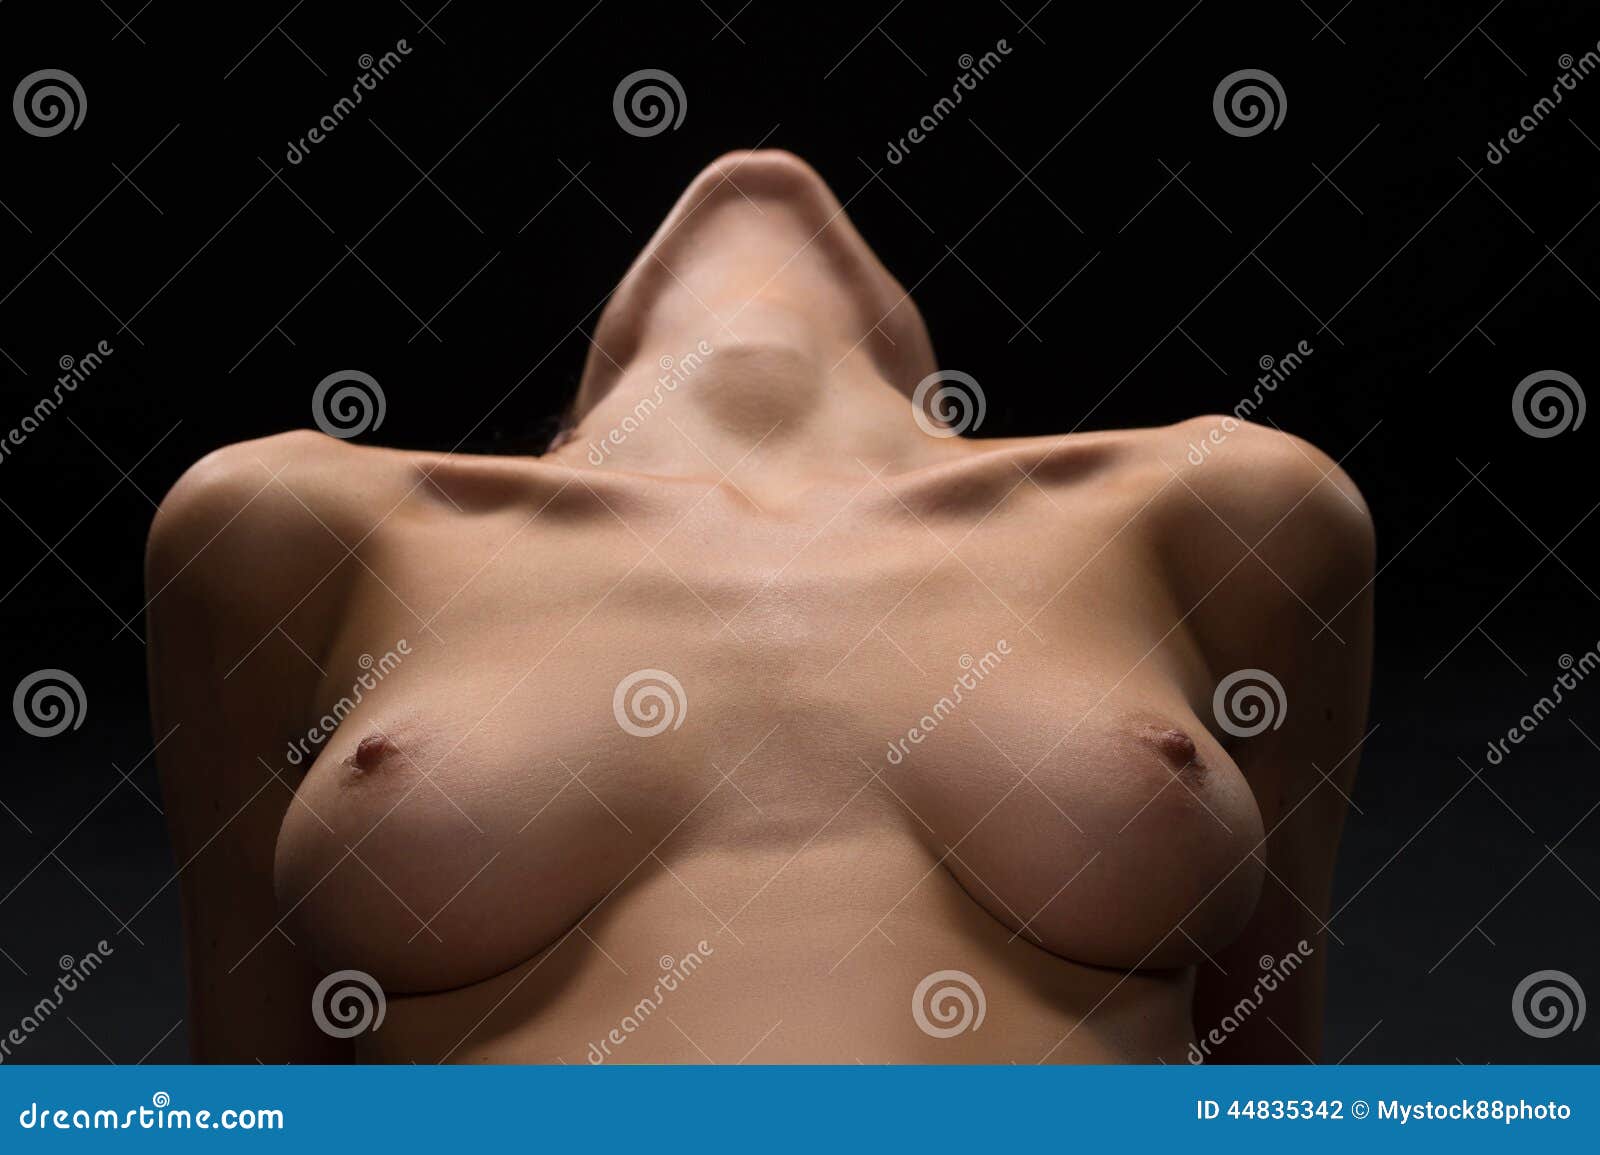 Nackt junge nippel Brustwarzen Porno